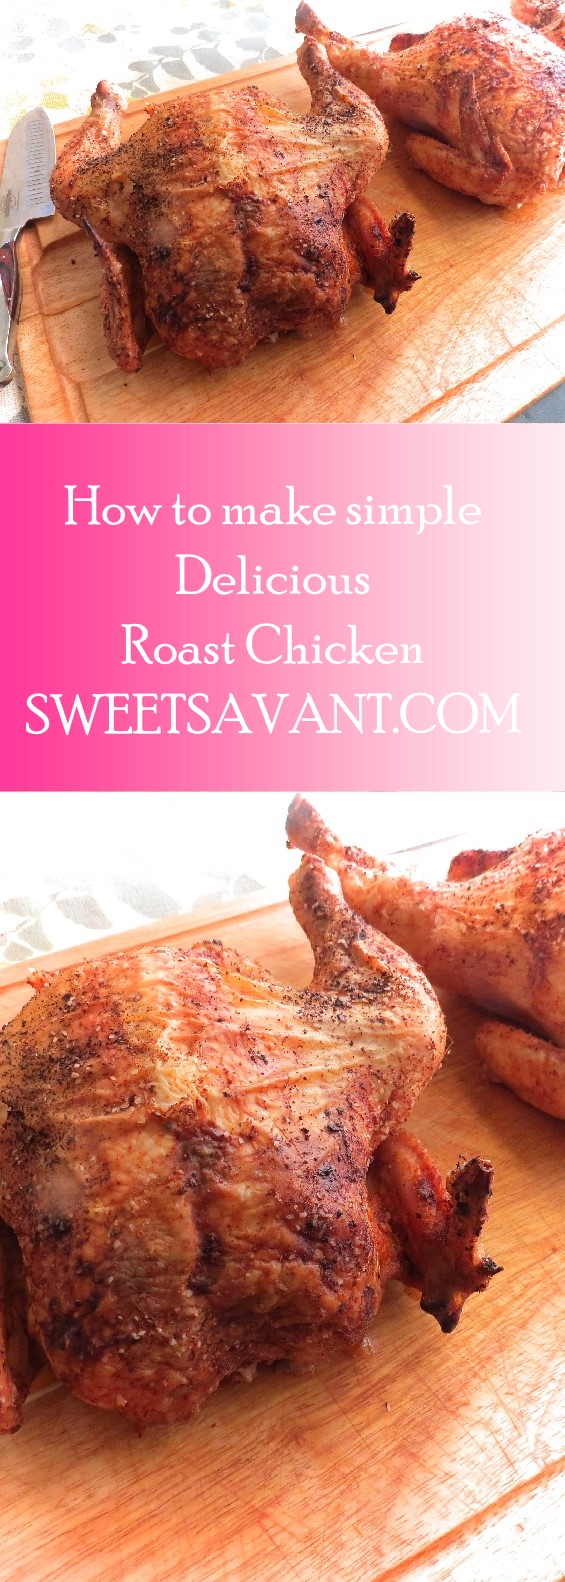 Roast chicken recipe how to make simple, delicious roast chicken sweetsavant.com America's best food blog